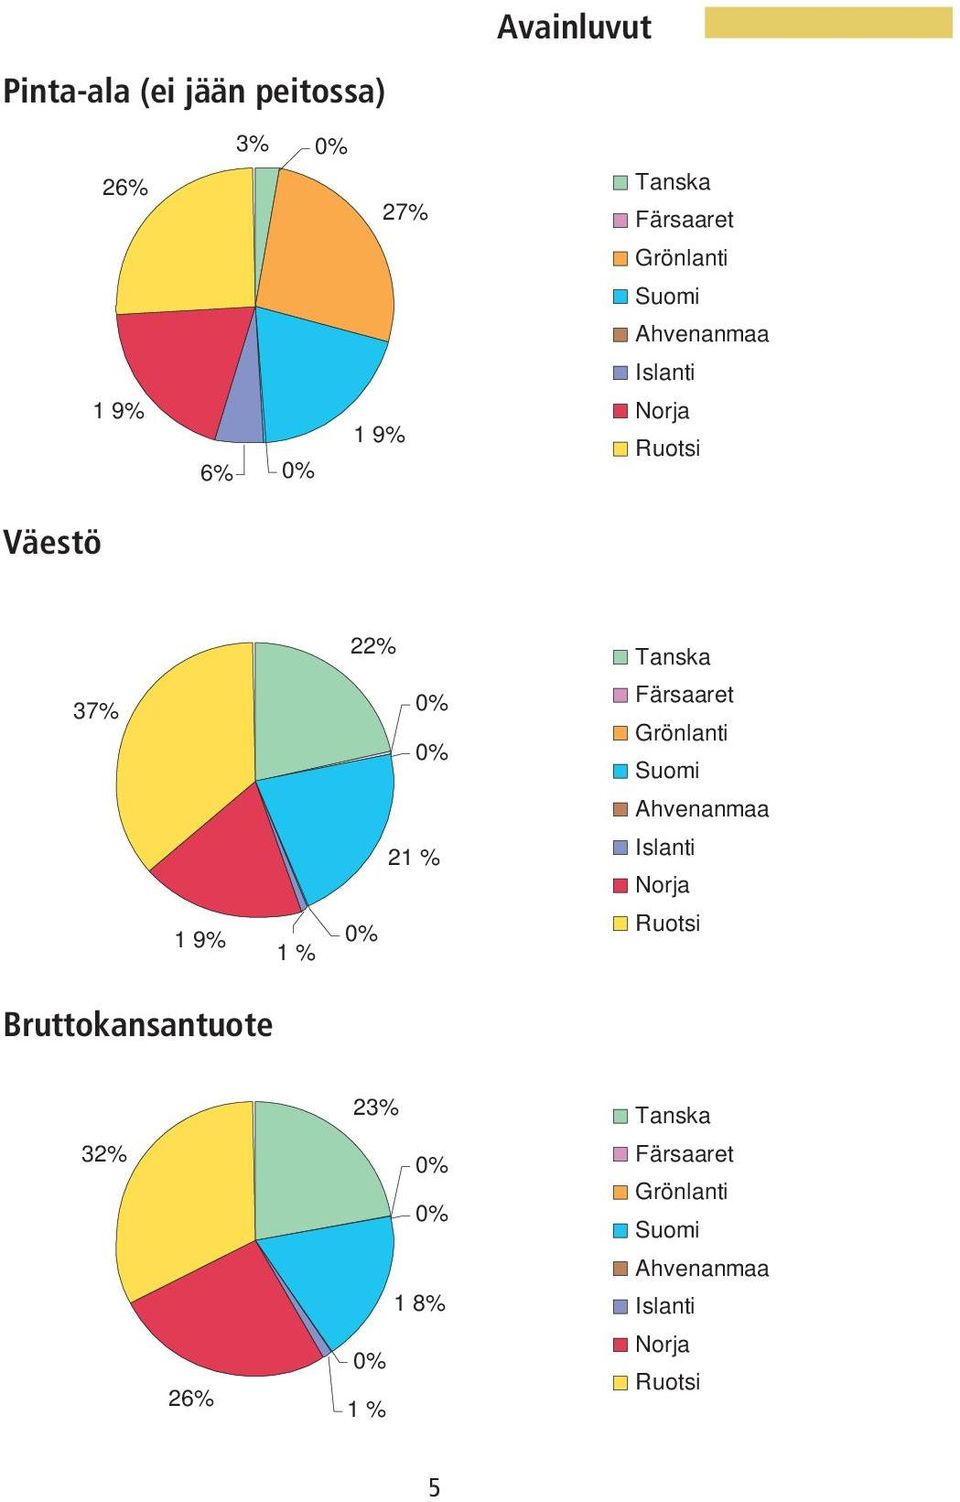 Färsaaret Grönlanti Ahvenanmaa 1 9% 1 % 21 % 0%